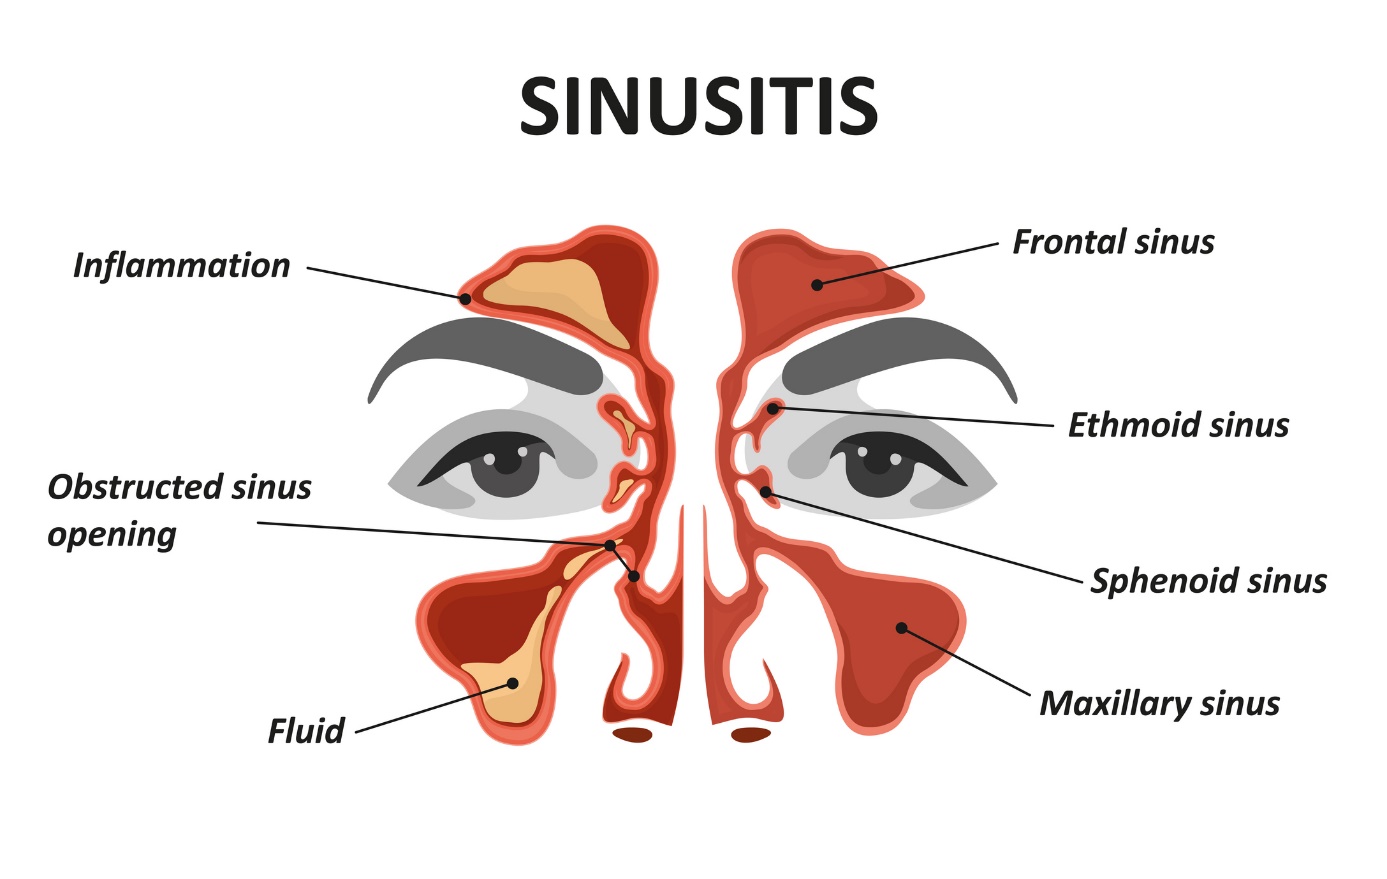 Animated model/image of sinusitis and sinusitis